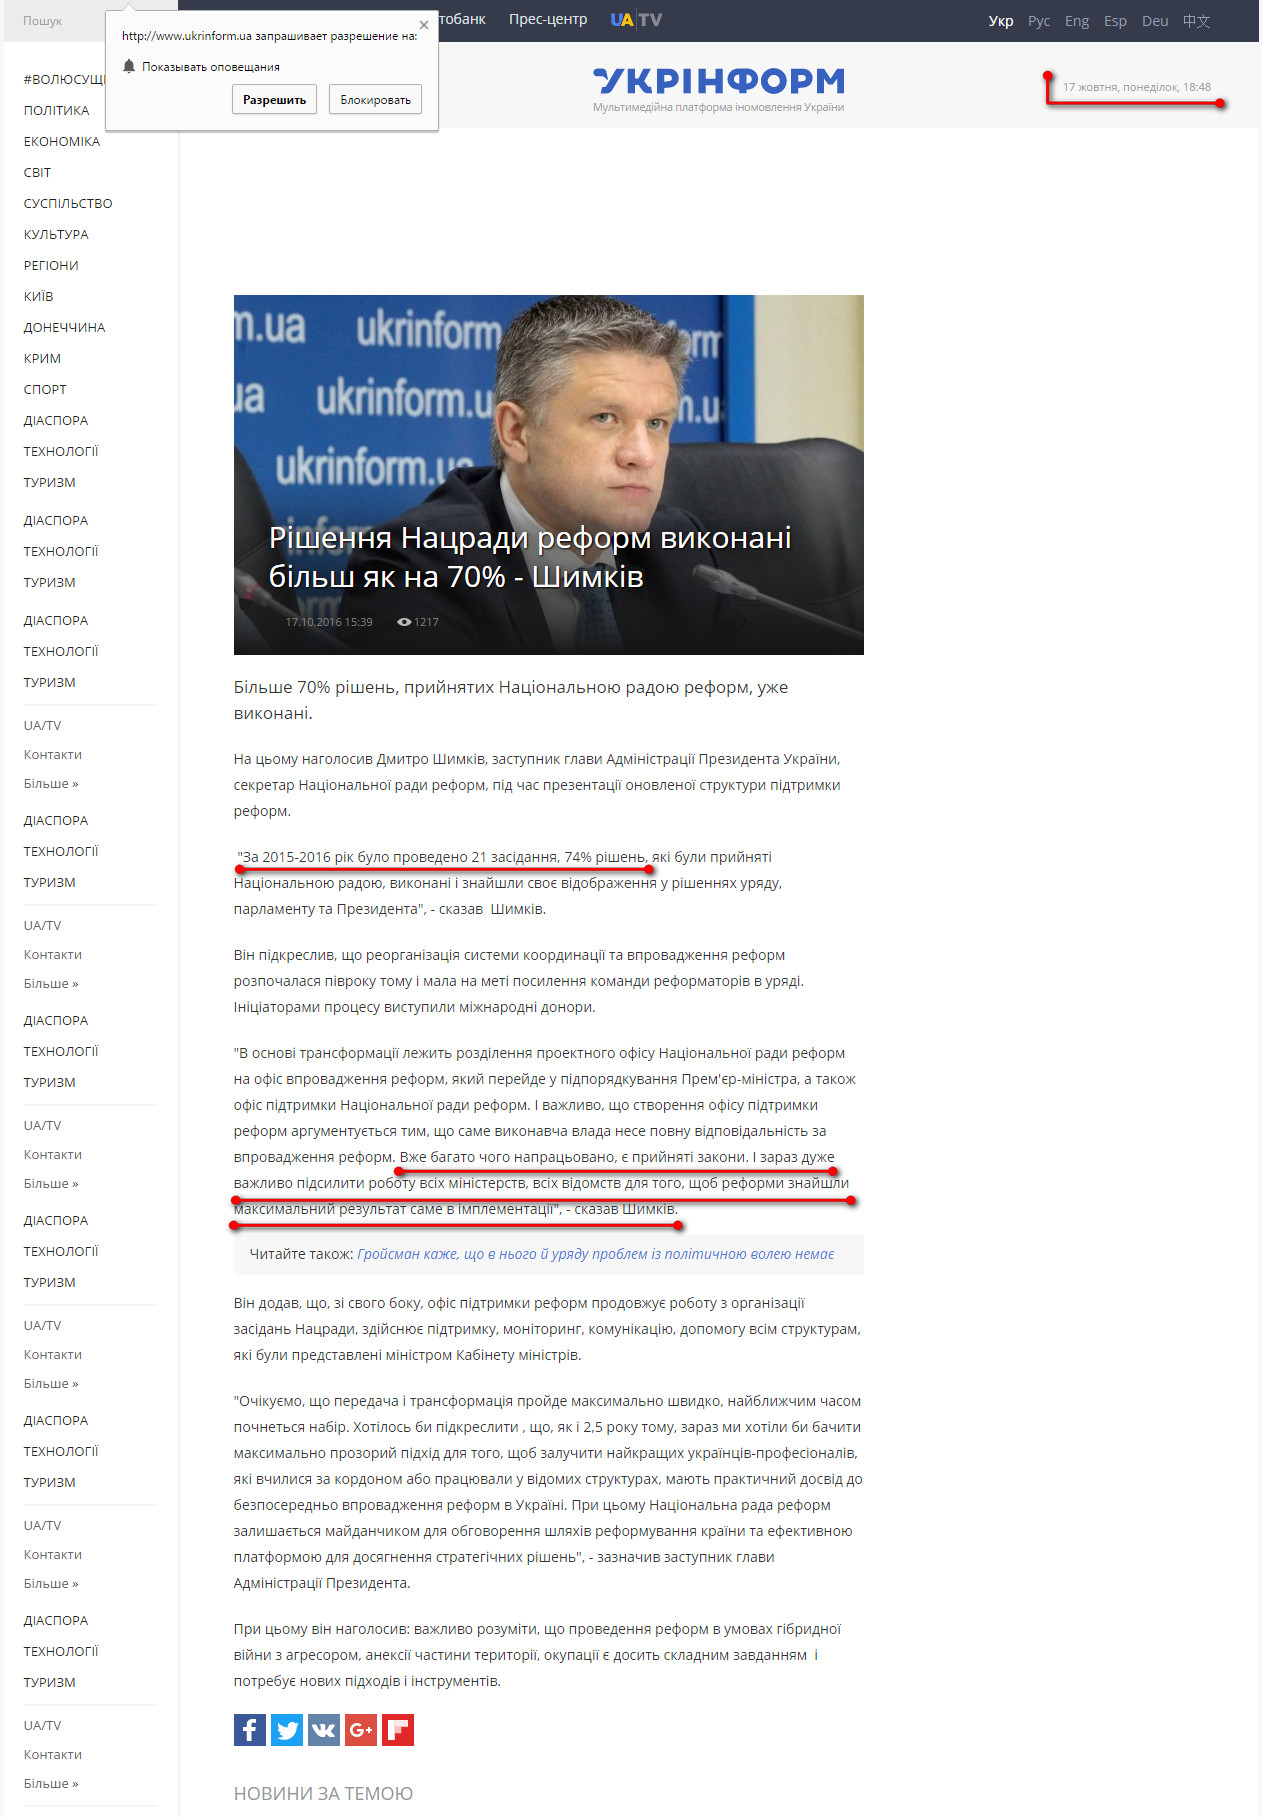 http://www.ukrinform.ua/rubric-politycs/2102964-risenna-nacradi-reform-vikonani-bils-ak-na-70-simkiv.html